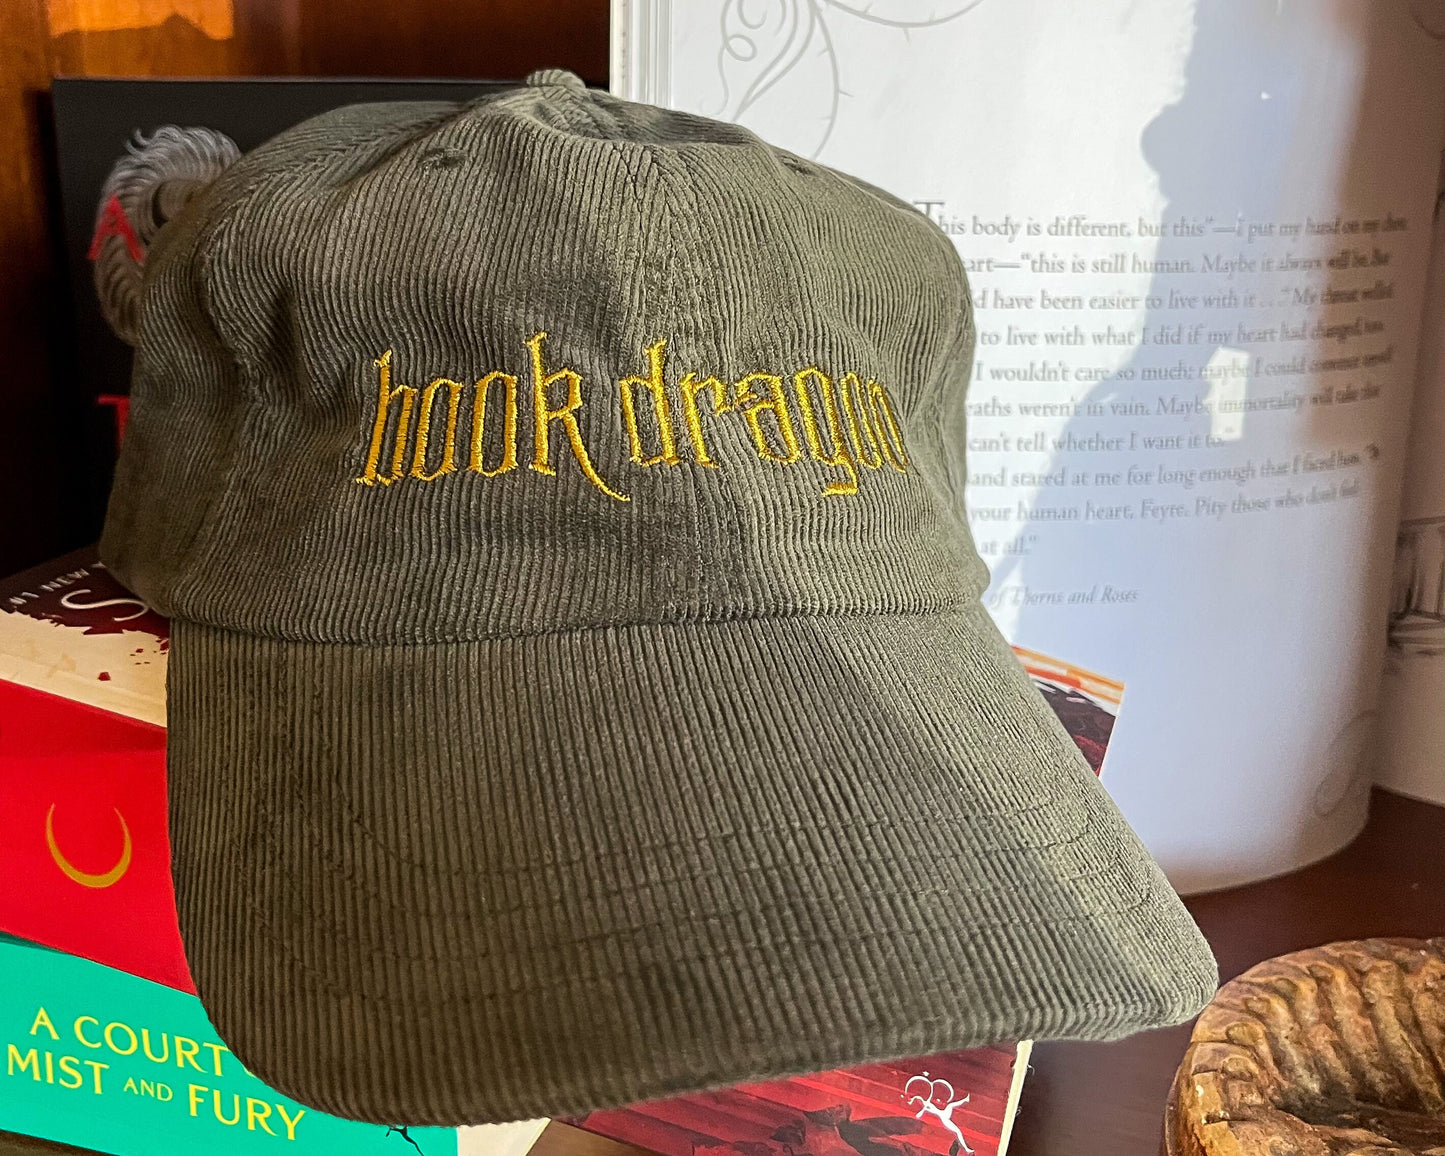 Vintage Corduroy Cap - Book Dragon - Bookish Embroidered Baseball Hat